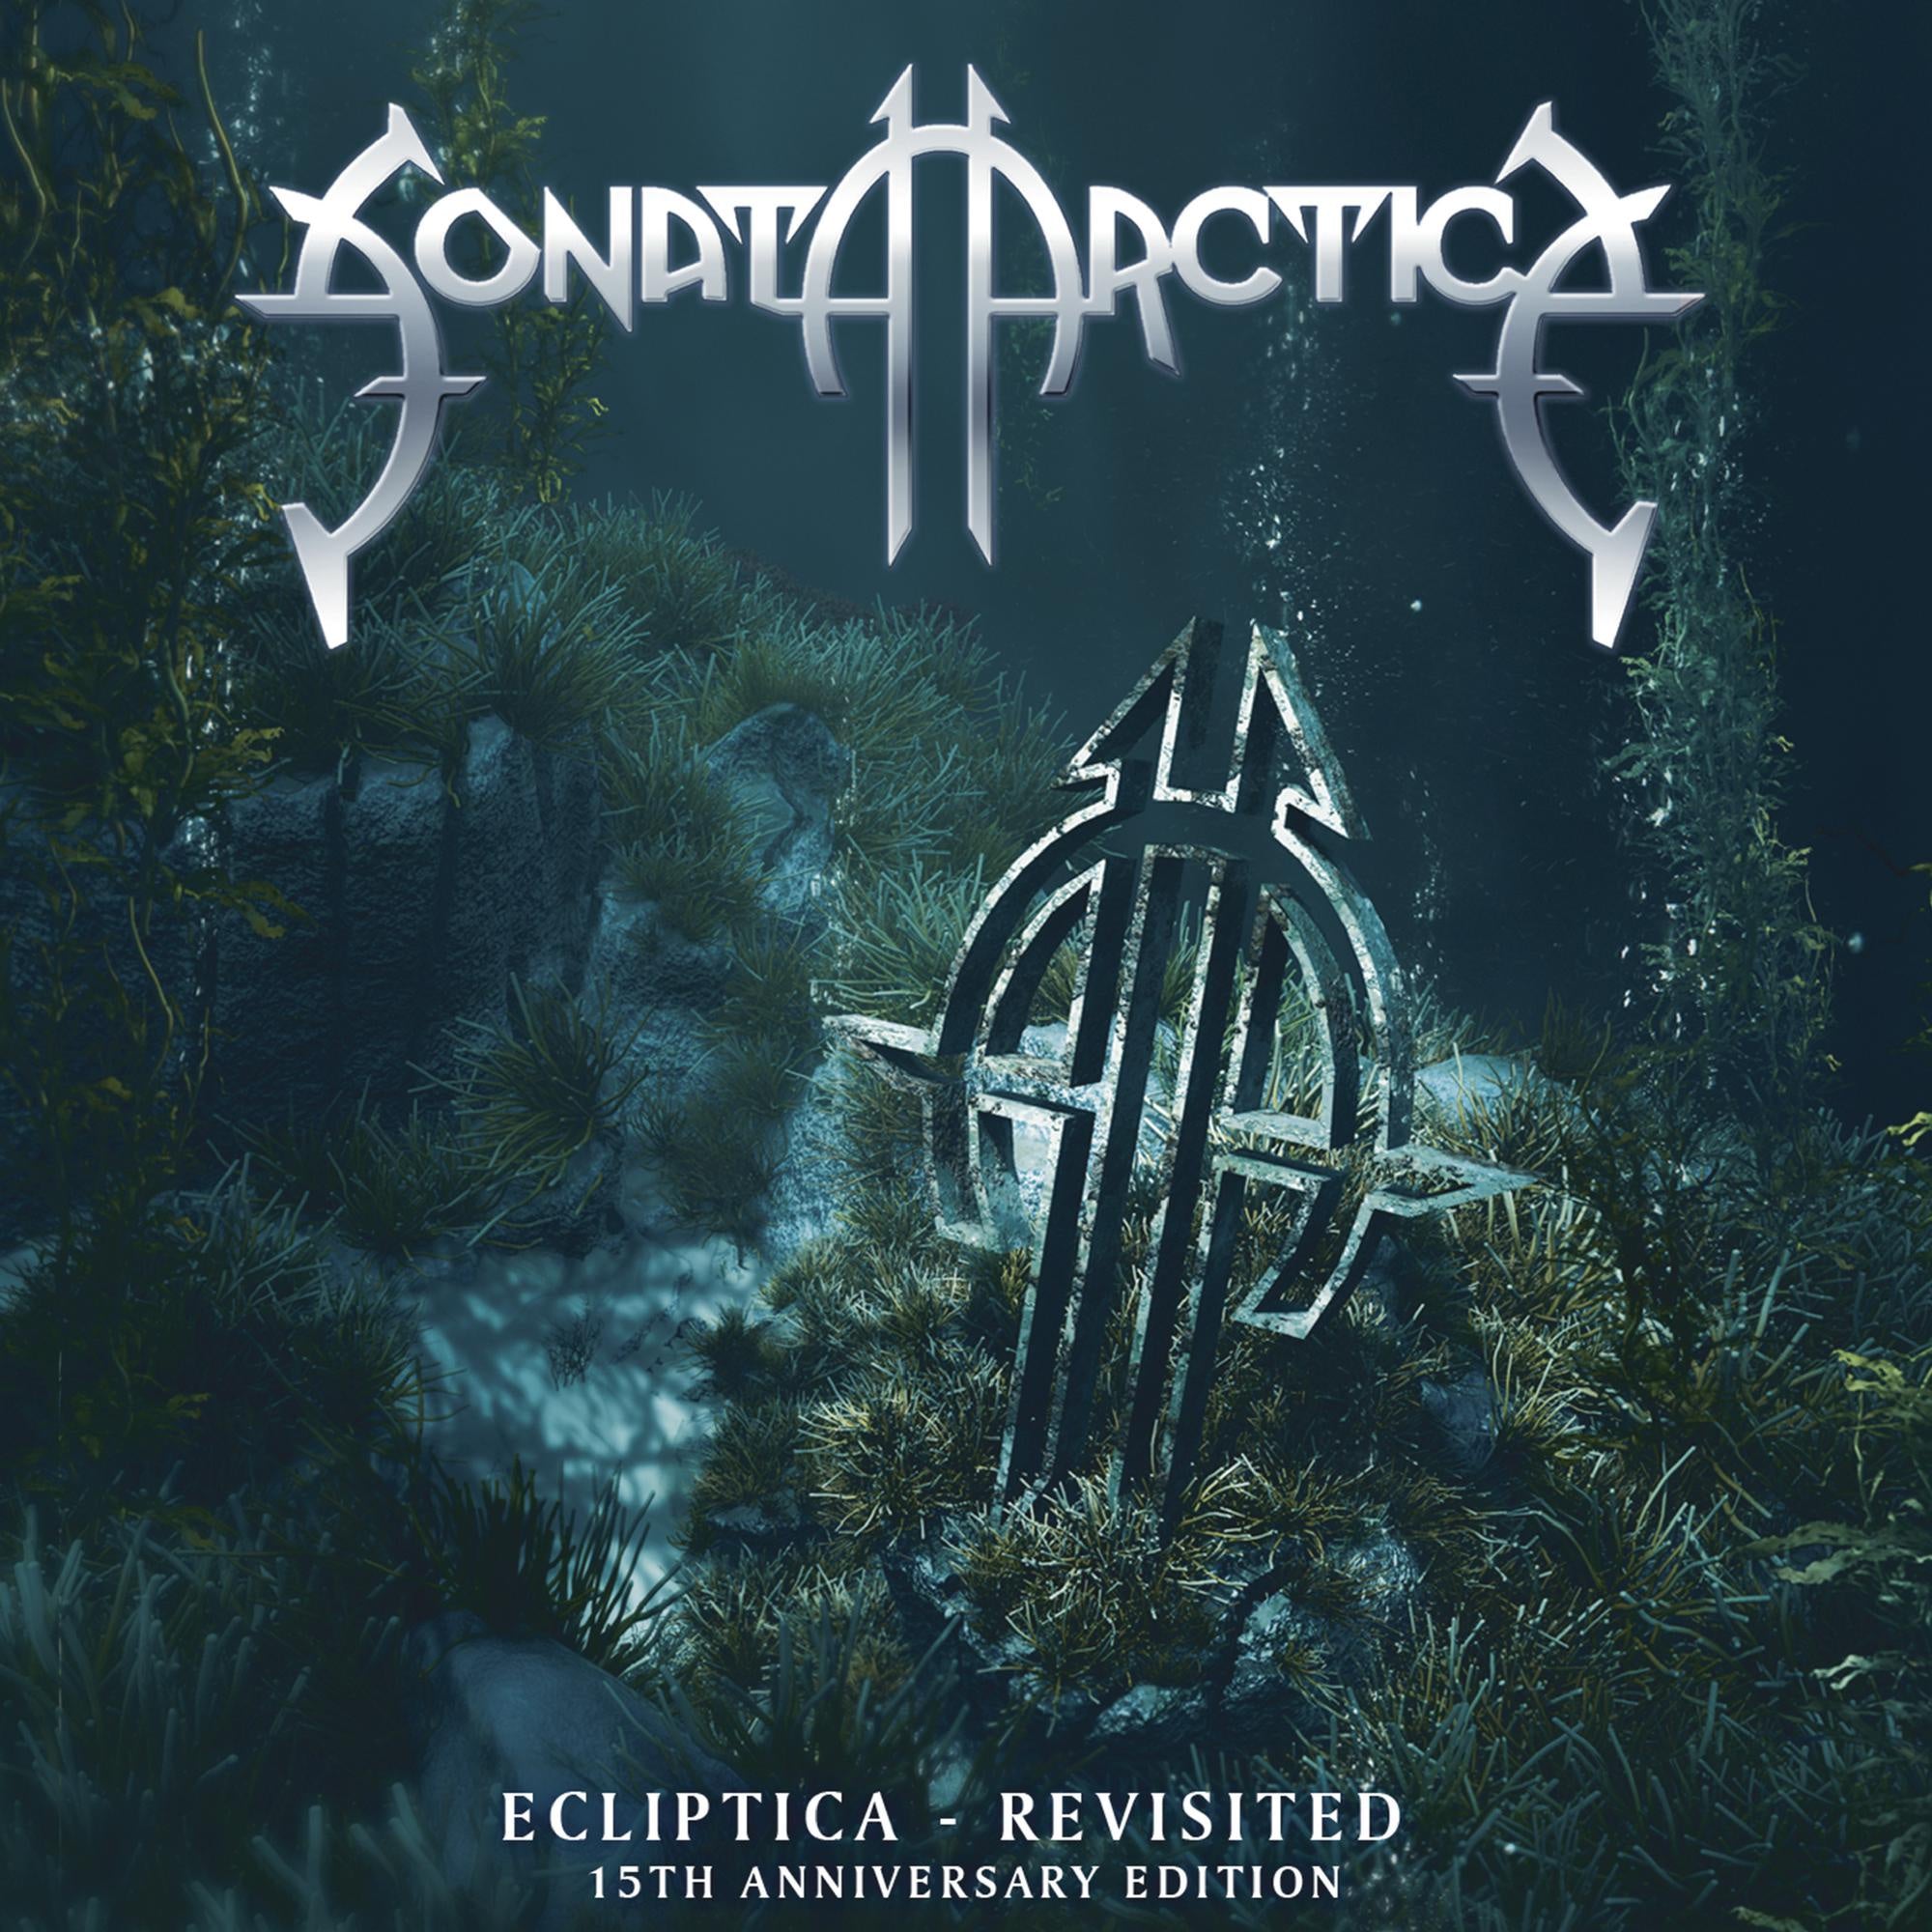 Sonata Arctica - Ecliptica Revisited (15 Years Anniversary) - New 2 LP Record 2020 Back On Black Vinyl - Power Metal